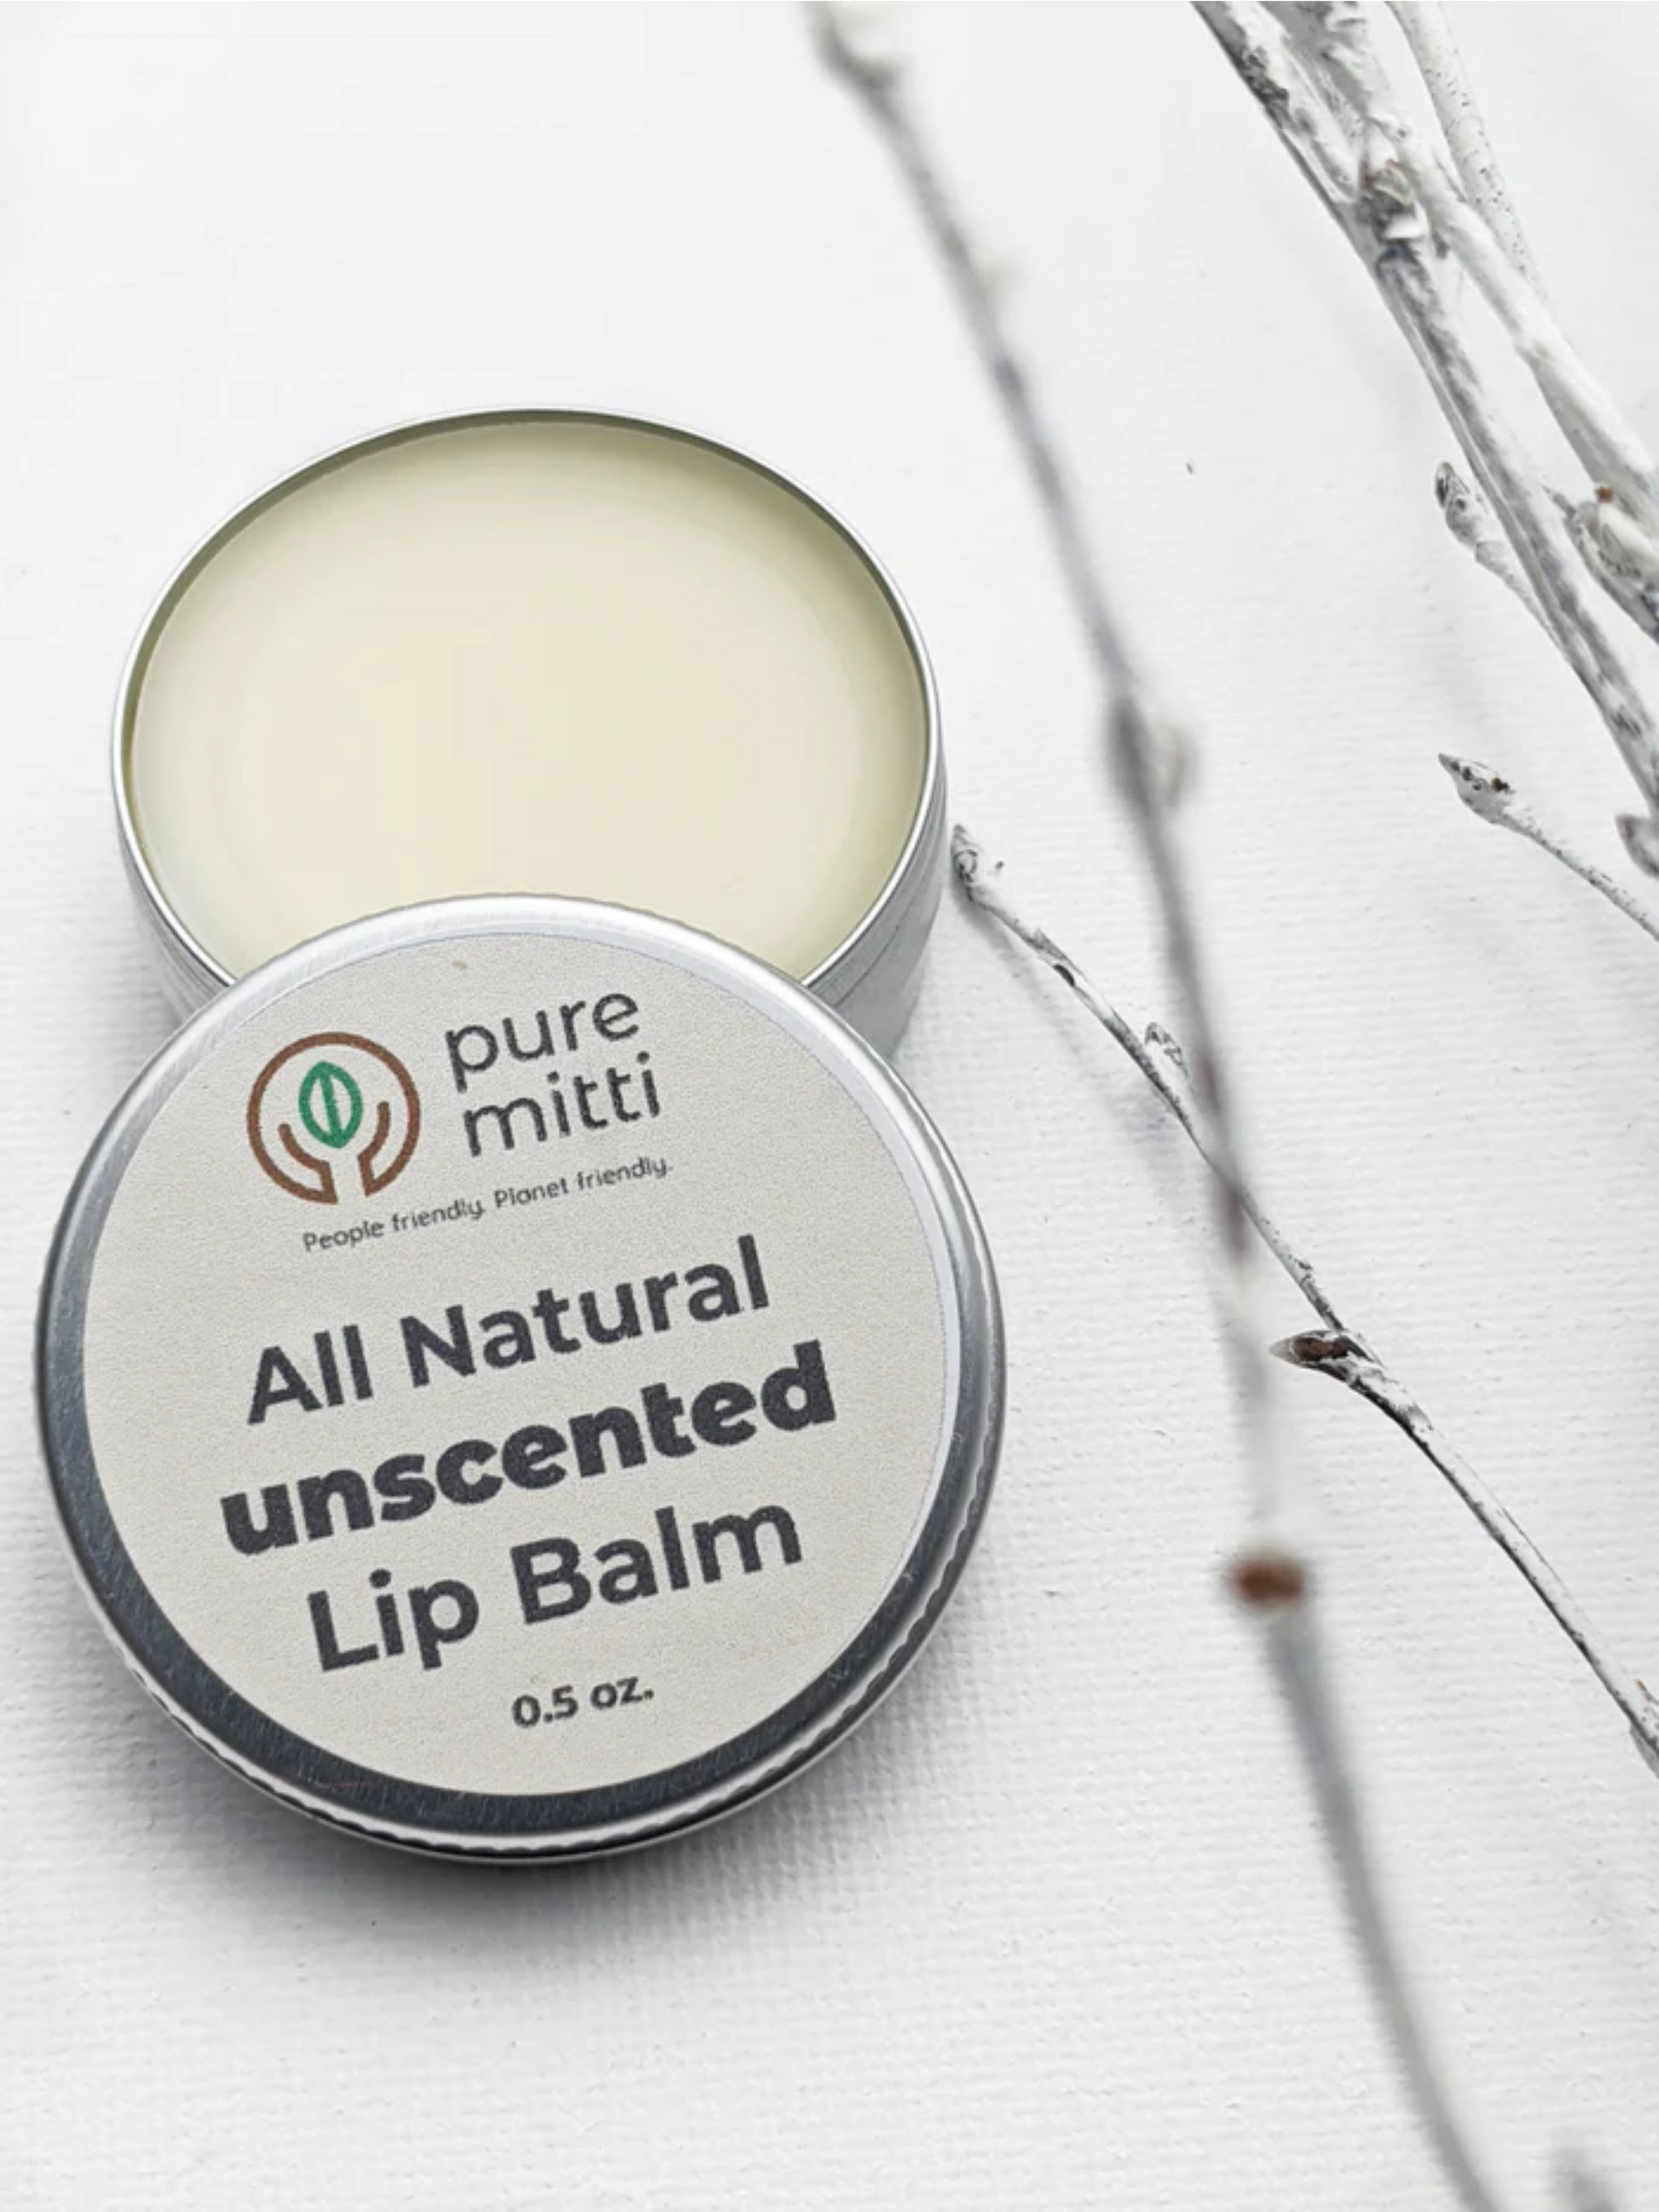 Unscented Lip balm